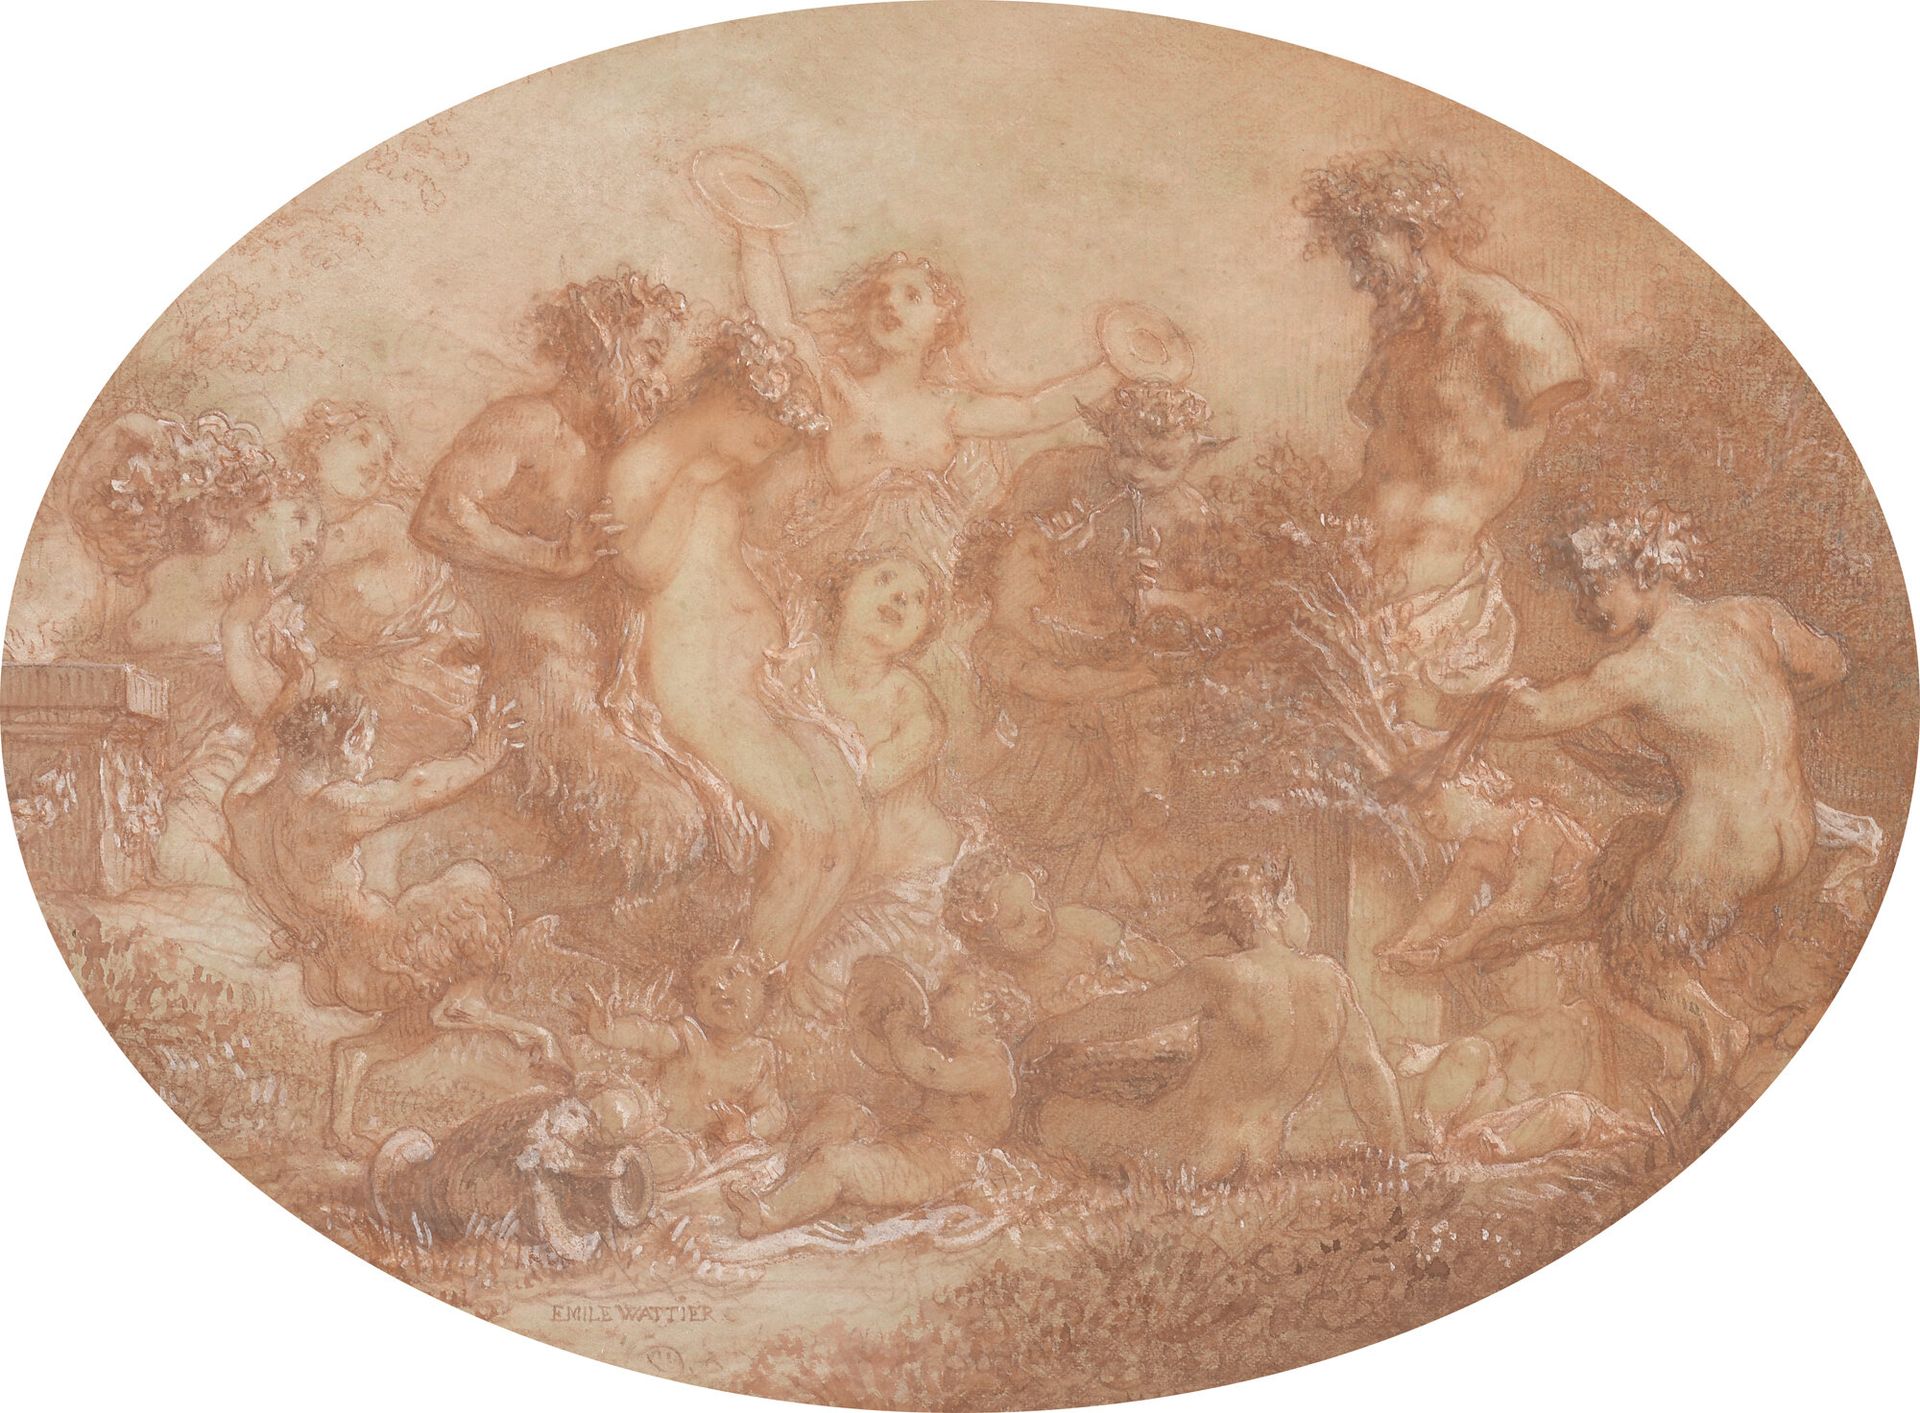 Null 瓦提尔(1800-1868)

Bacchanale

血色、墨色、水粉高光纸上。

左下角有签名。

20 x 24.5厘米